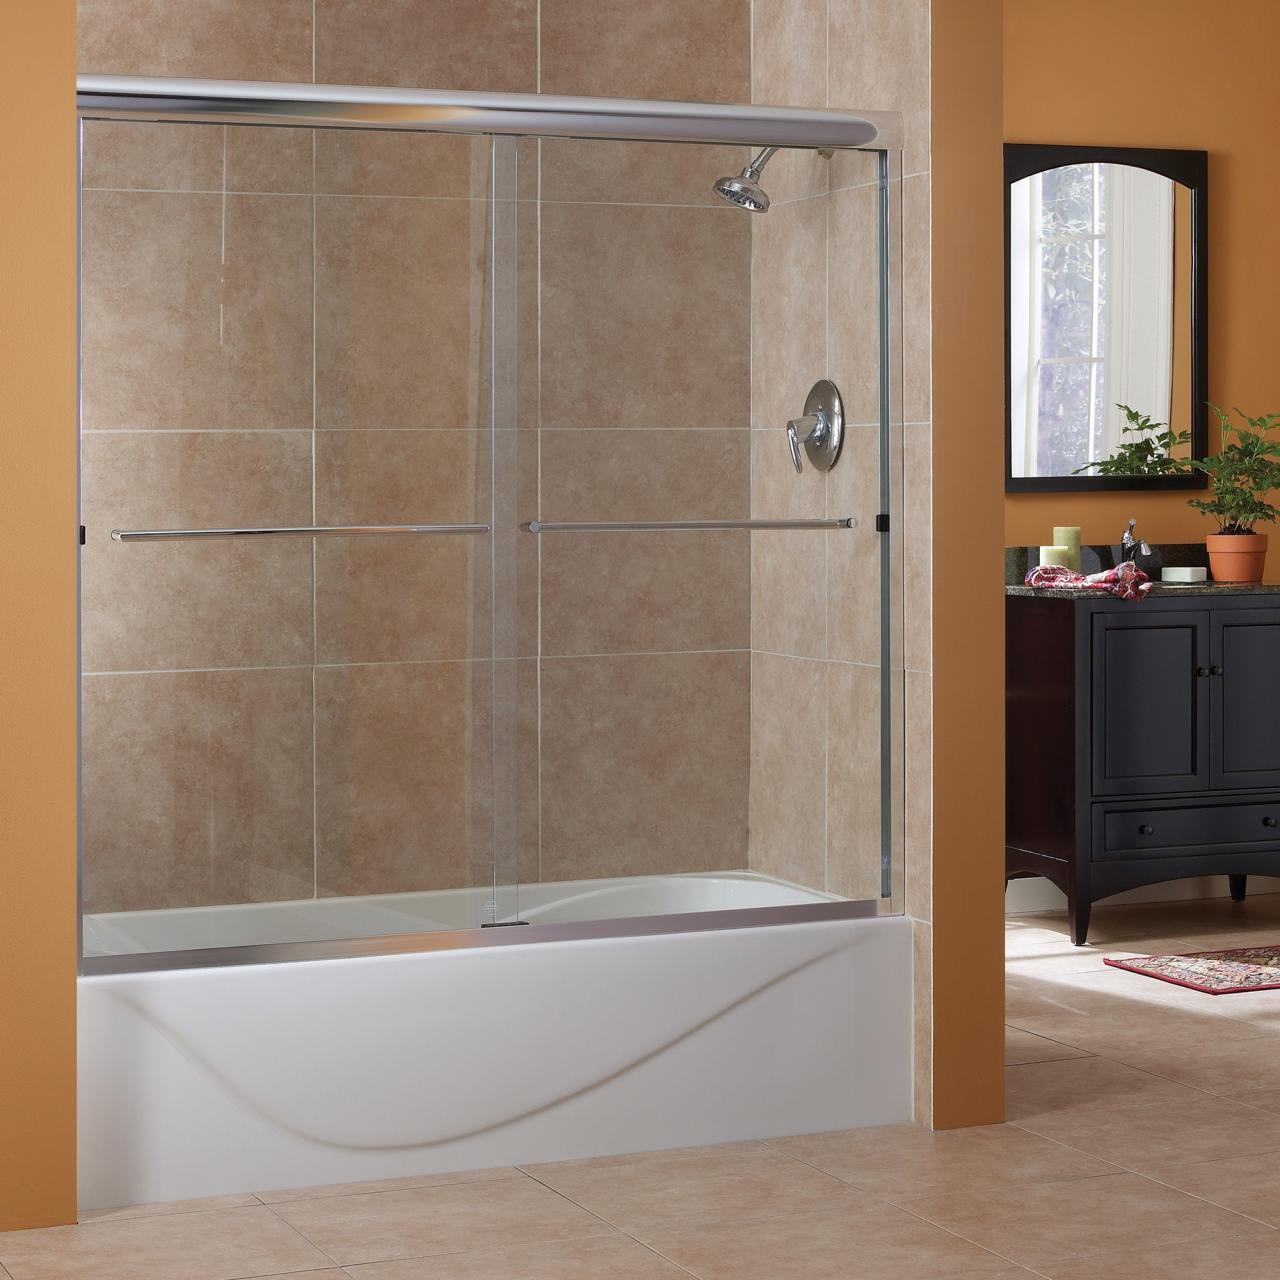 How to Install Sliding Glass Bathtub Doors | Your Health Explained